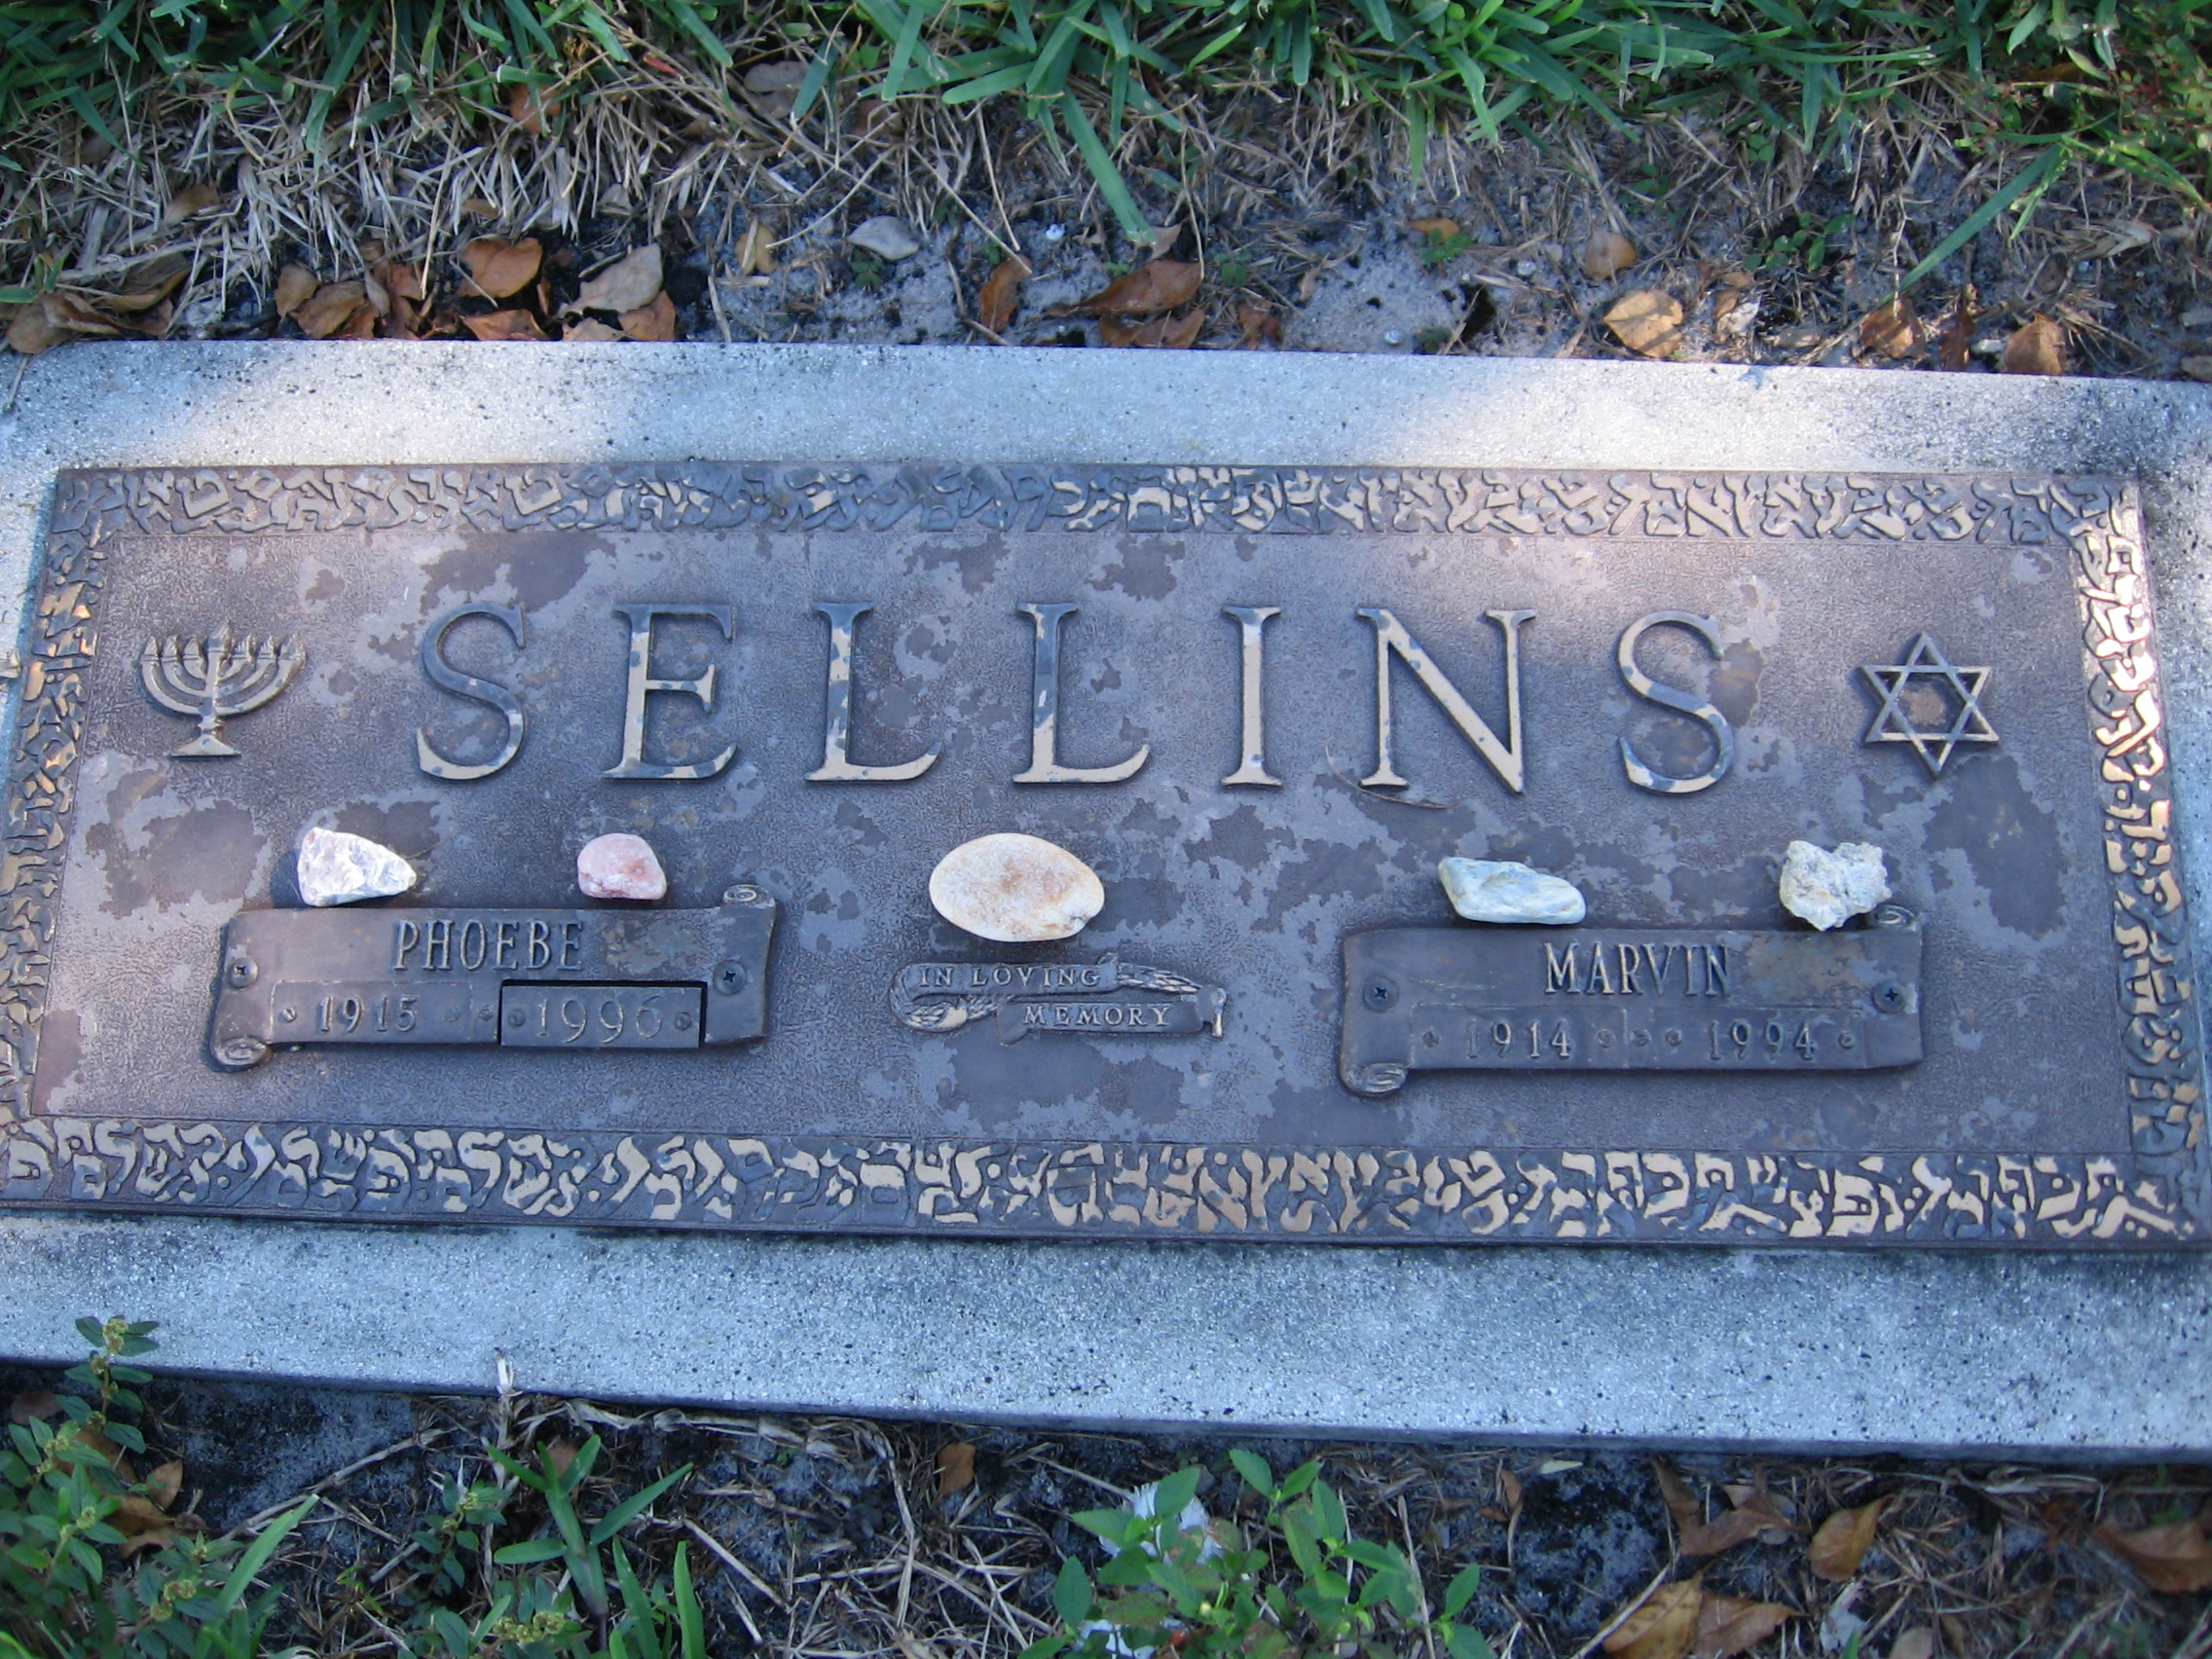 Marvin Sellins